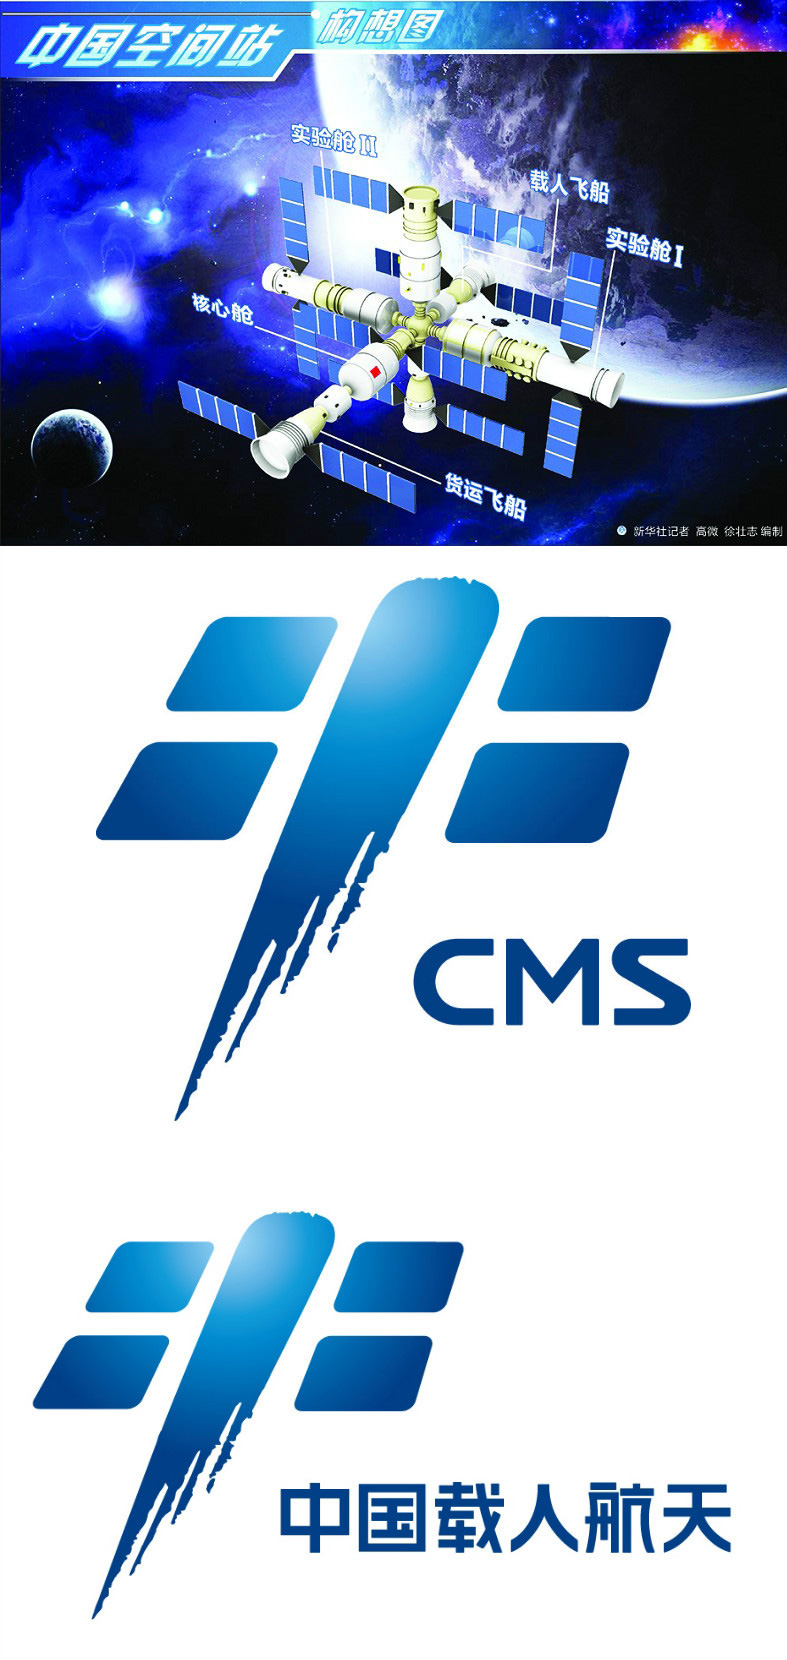 China Manned Space Engineering logo2 й˺칤̱ʶʽ